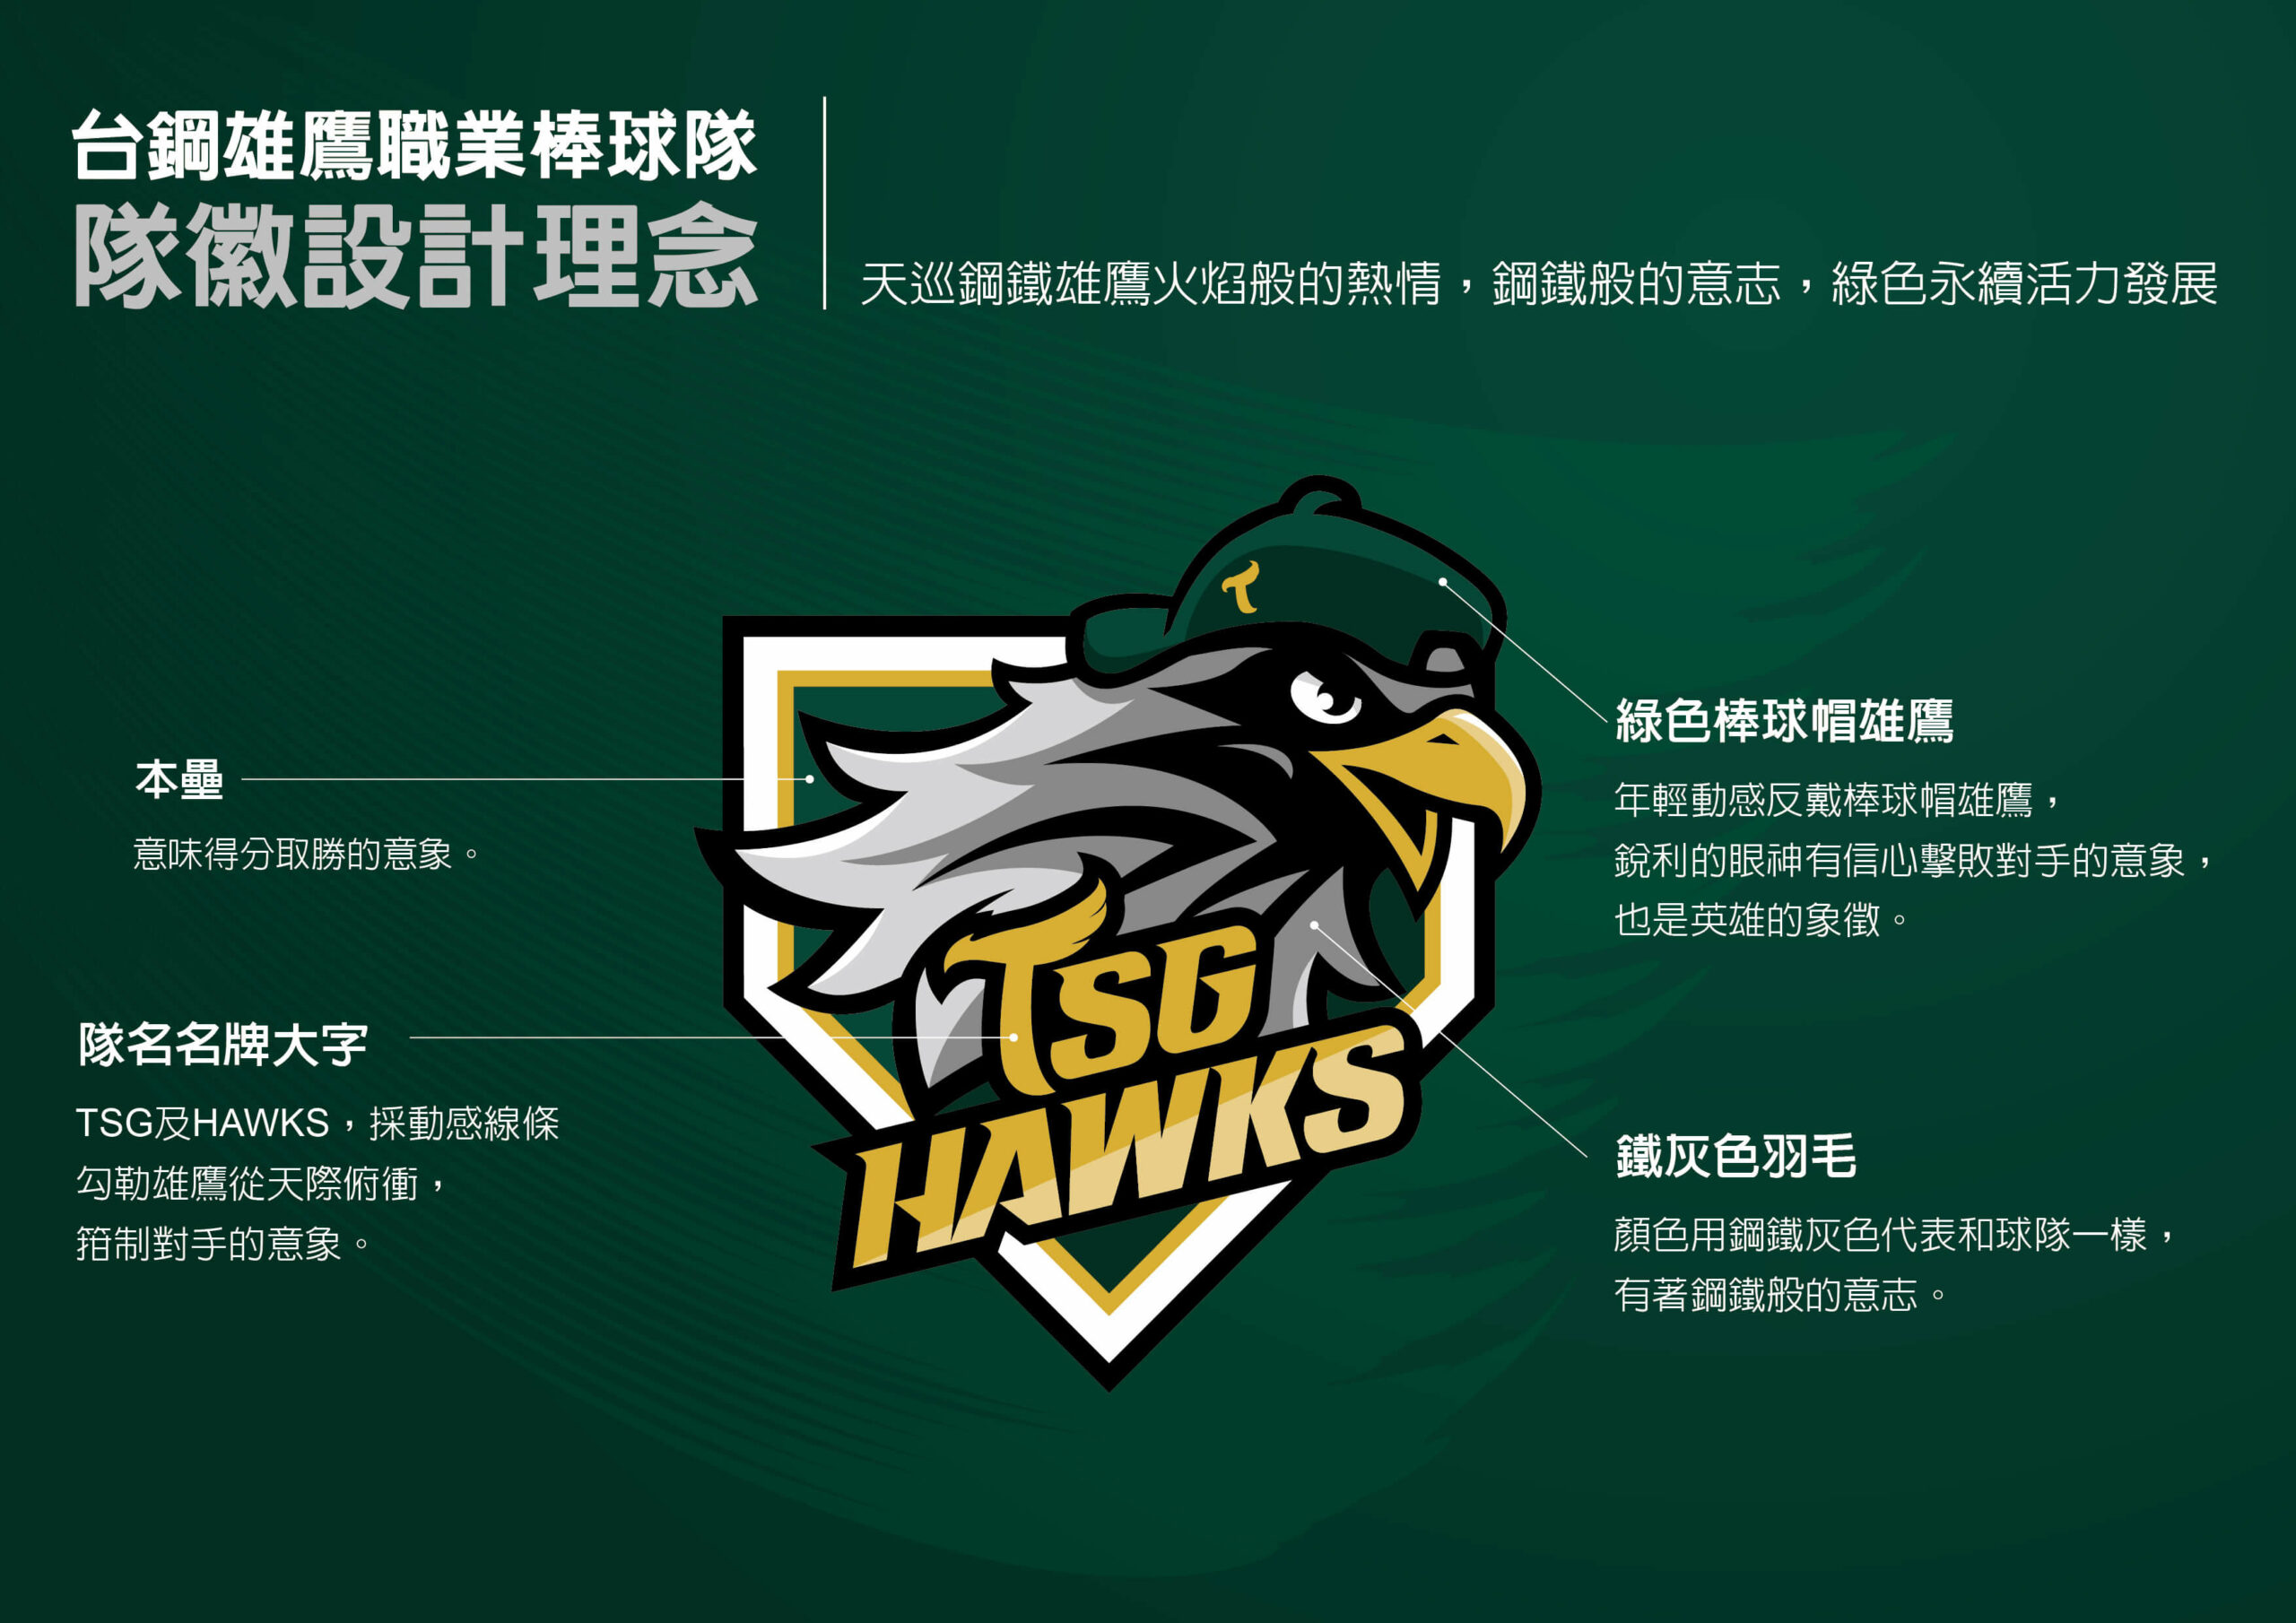 Hawks unveil new corporate logo on their uniform